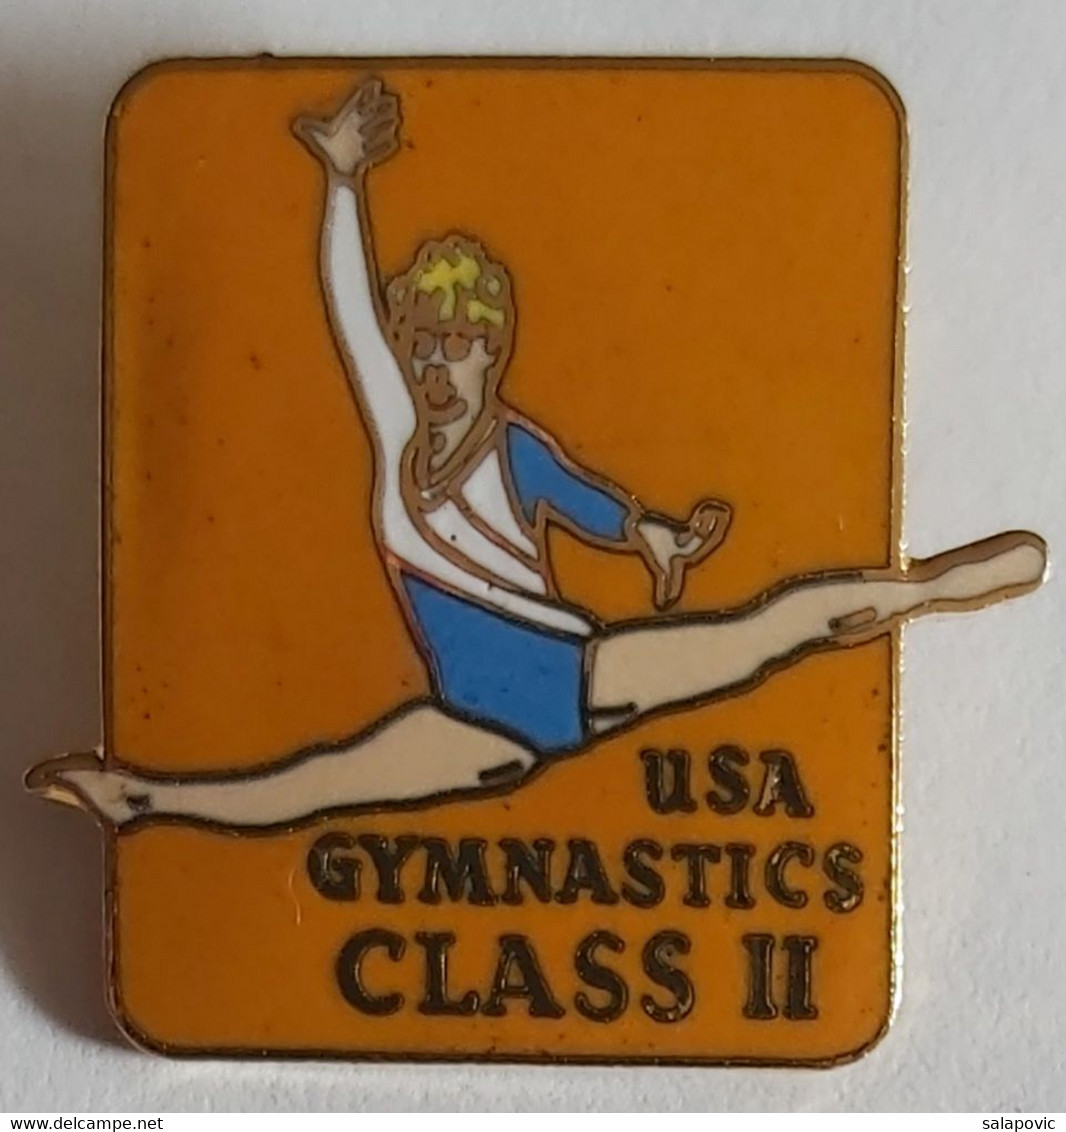 USA Gymnastics CLASS II PINS PLAST, DAMAGED Broken Needle - Gymnastique